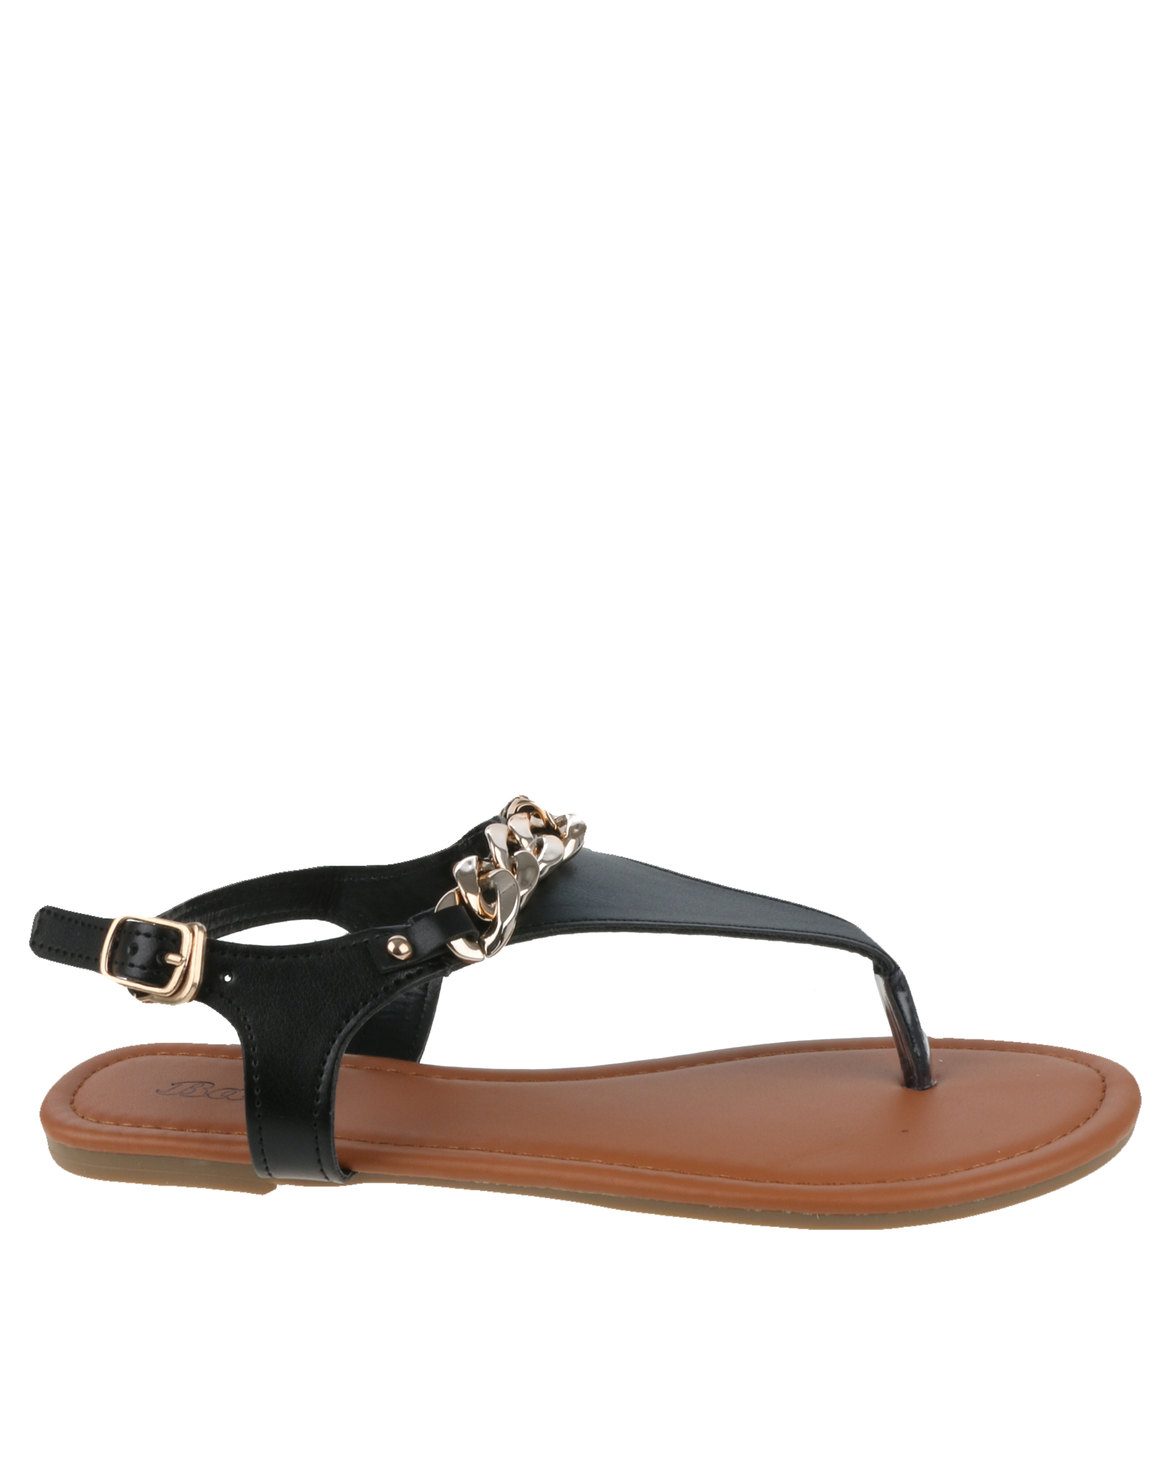 Bata Ladies Sandals With Gold Chain Detail Black | Zando